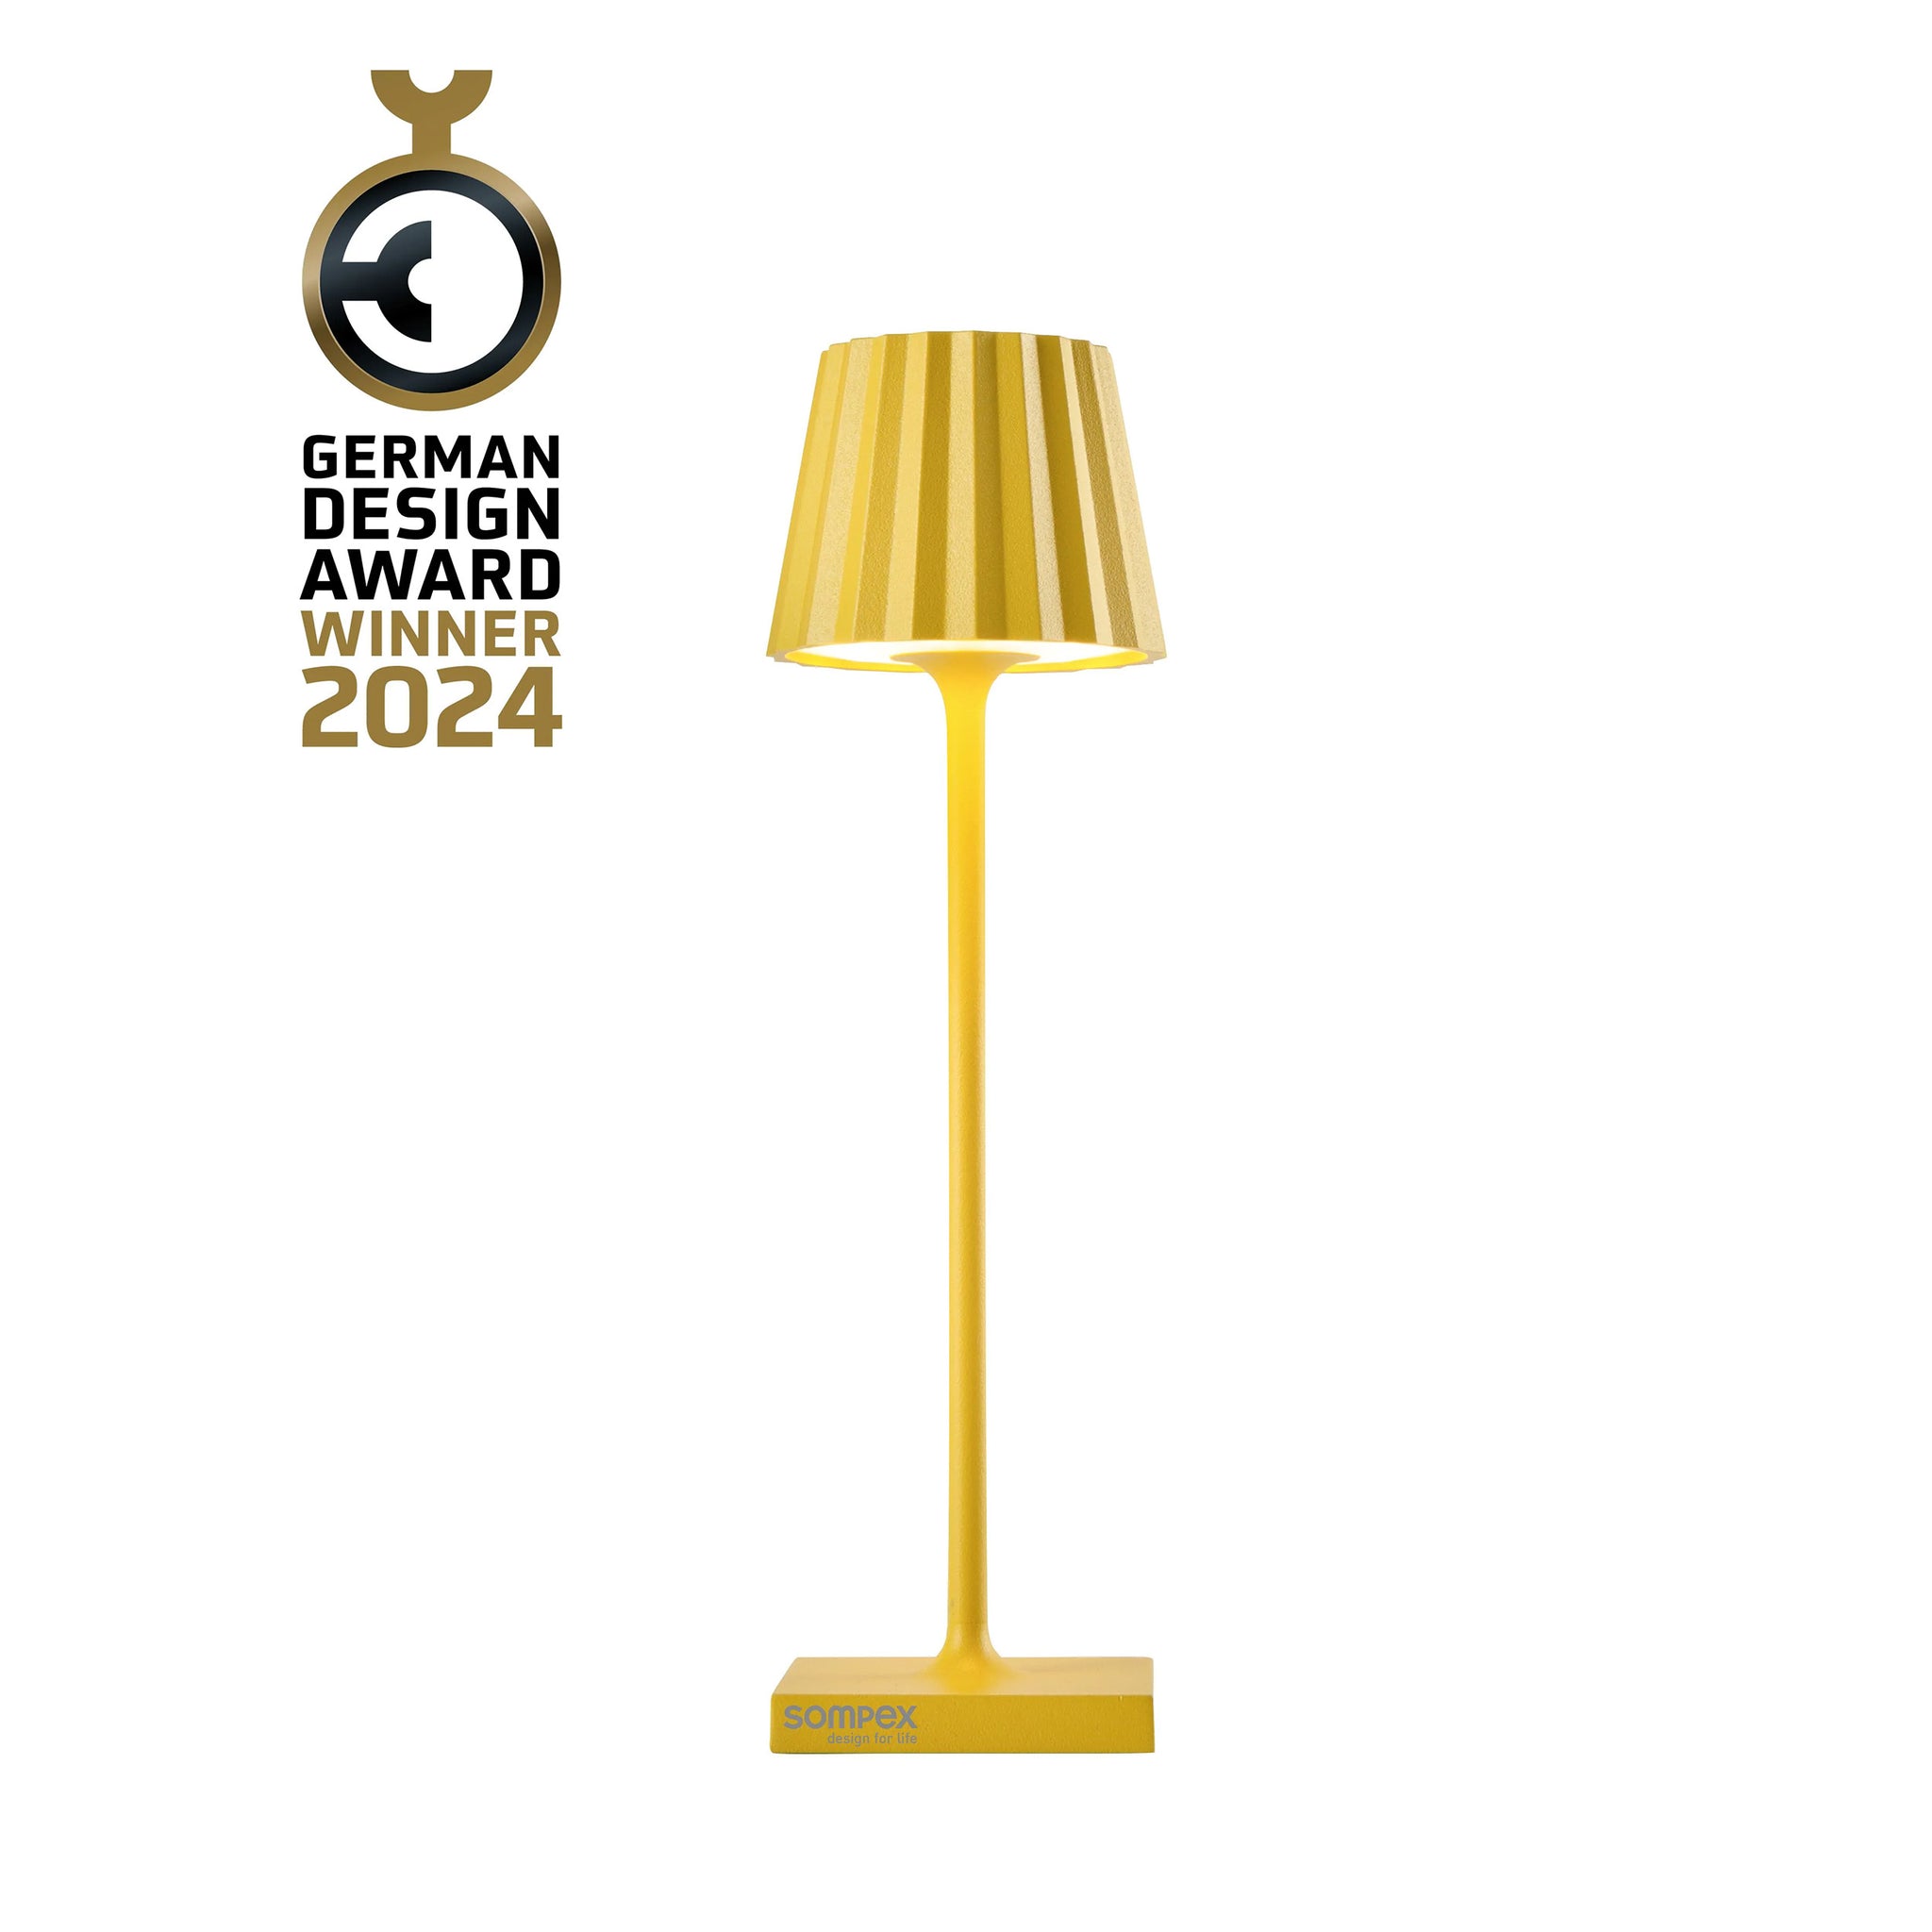 Sompex Troll Nano Geel│Oplaadbare Tafellamp│Buitenverlichting│art. 78572│logo German Design Award Winner 2024